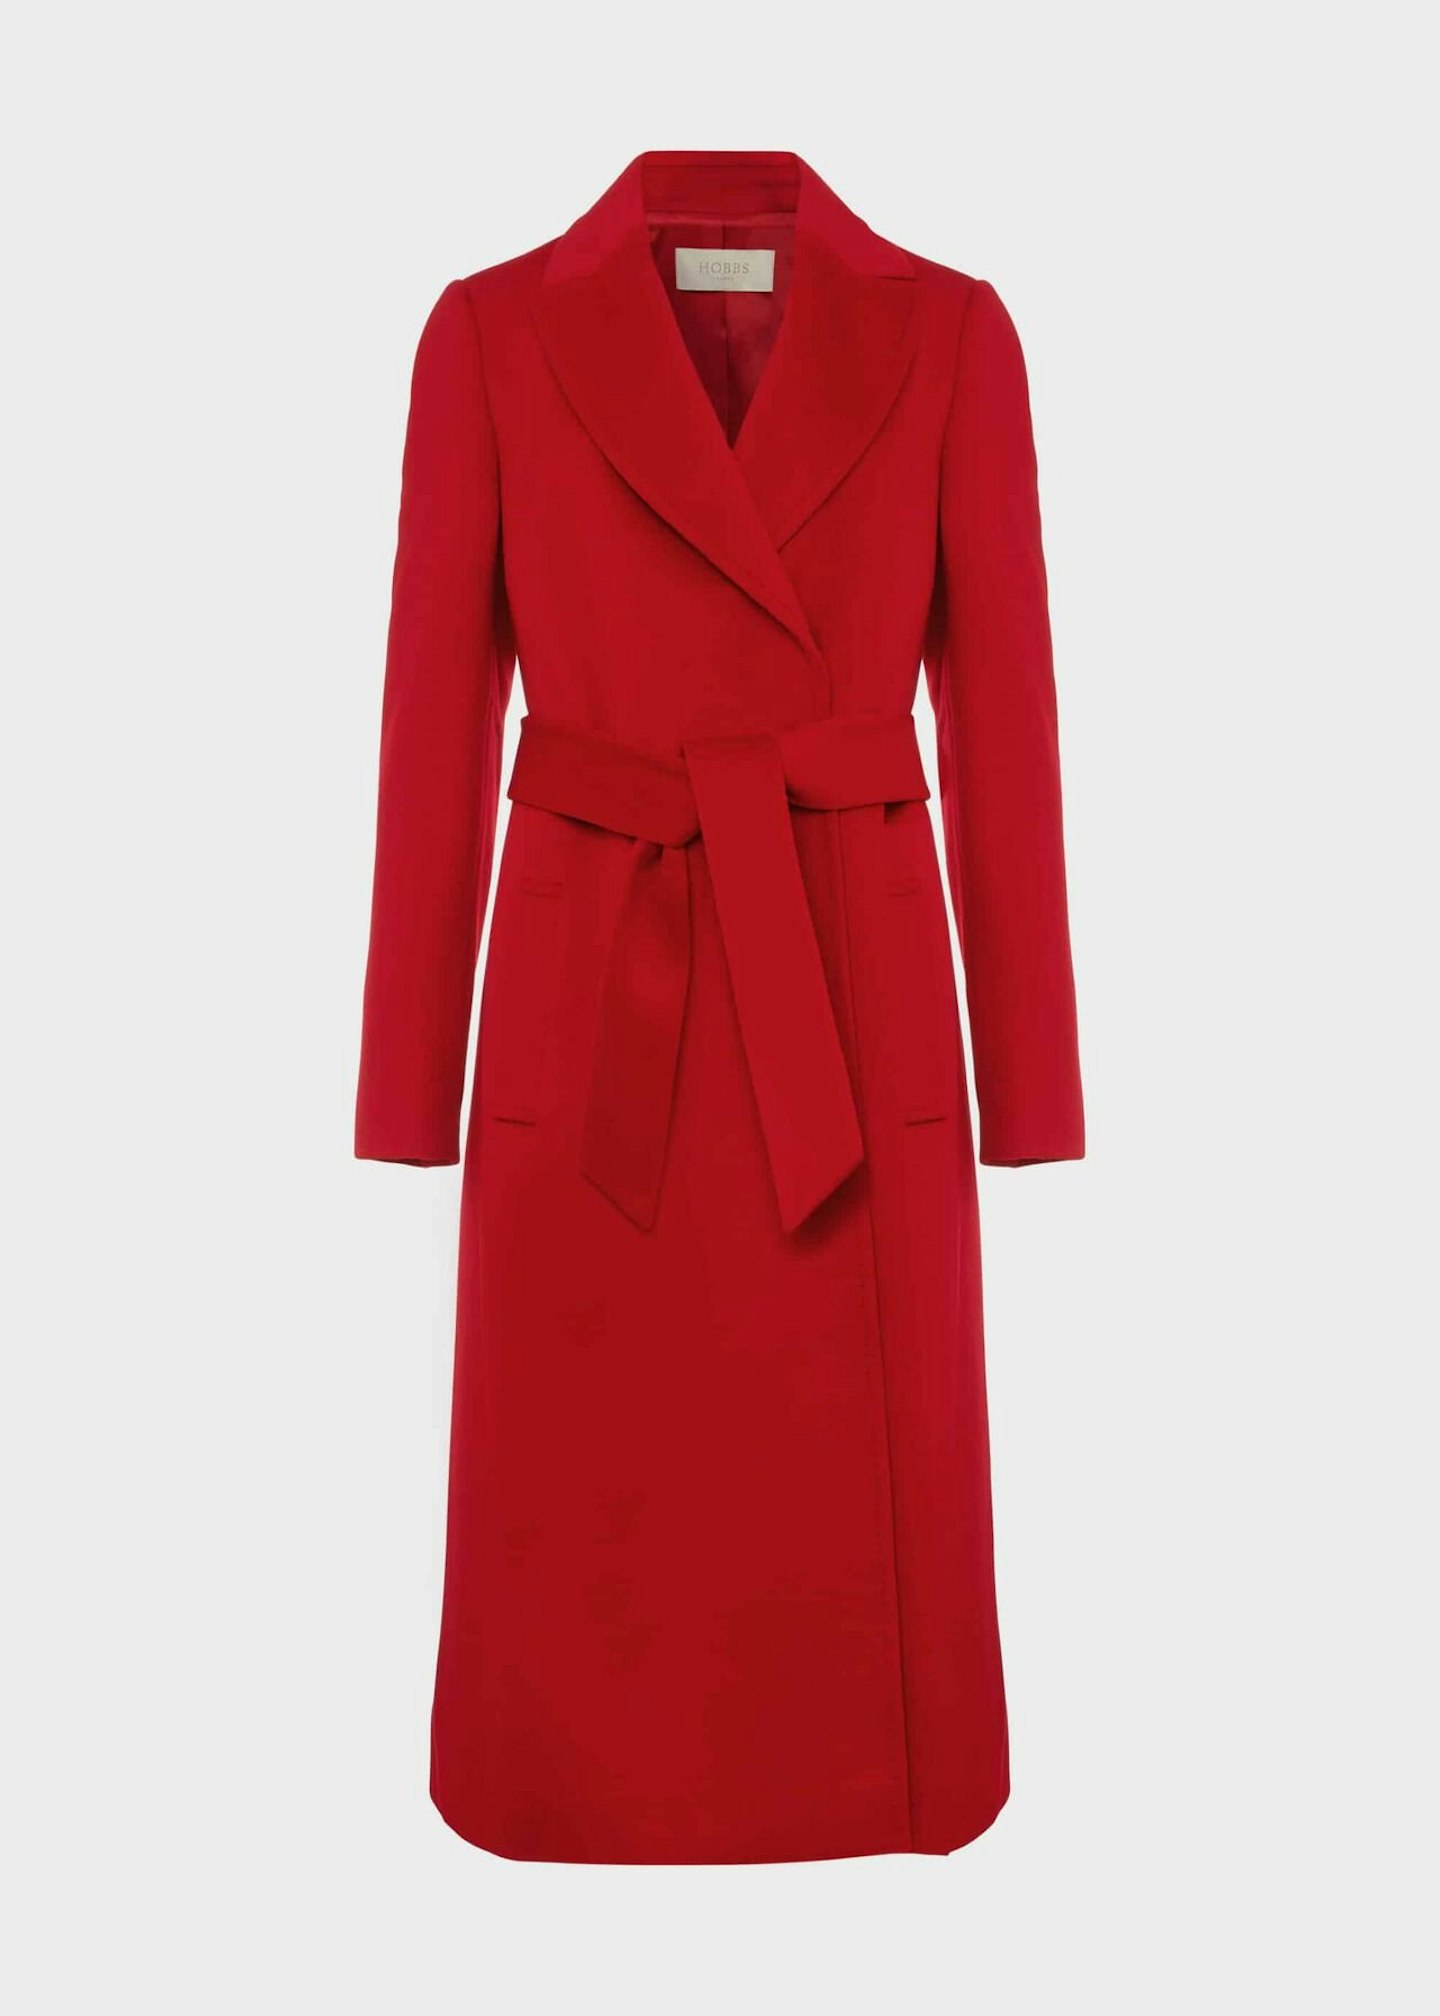 Hobbs, Olivia Wool Wrap Coat, £209